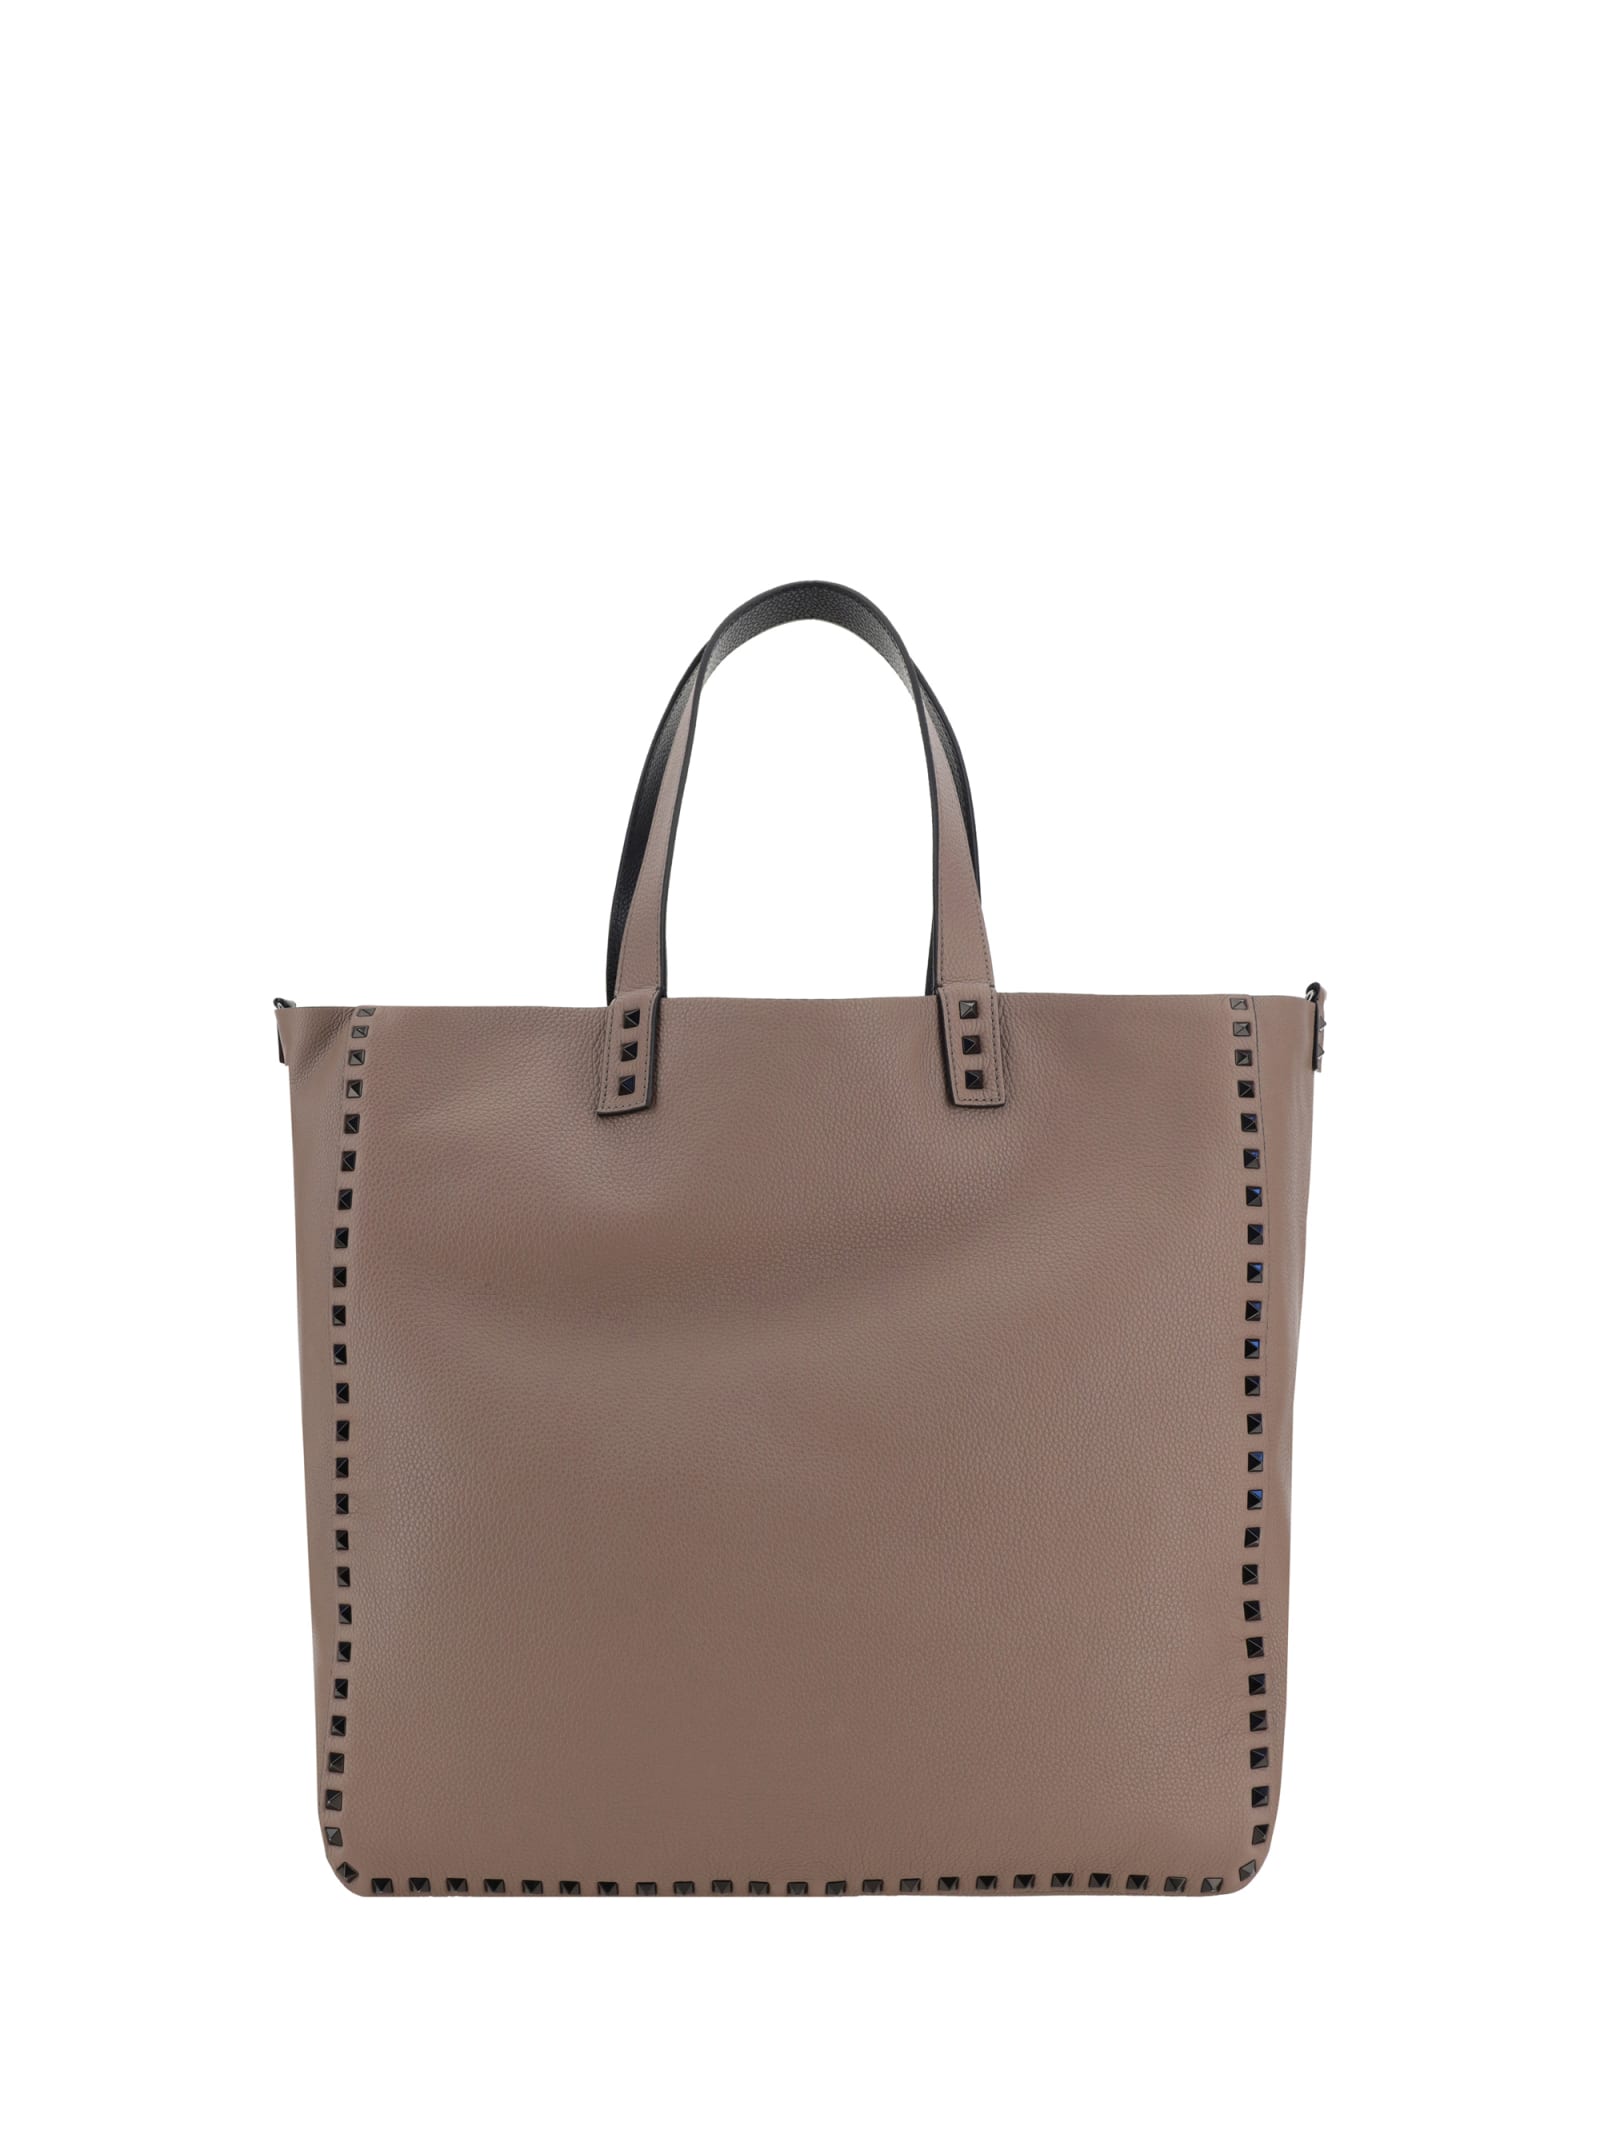 Valentino Garavani Rockstud Shoulder Bag In Brown/black